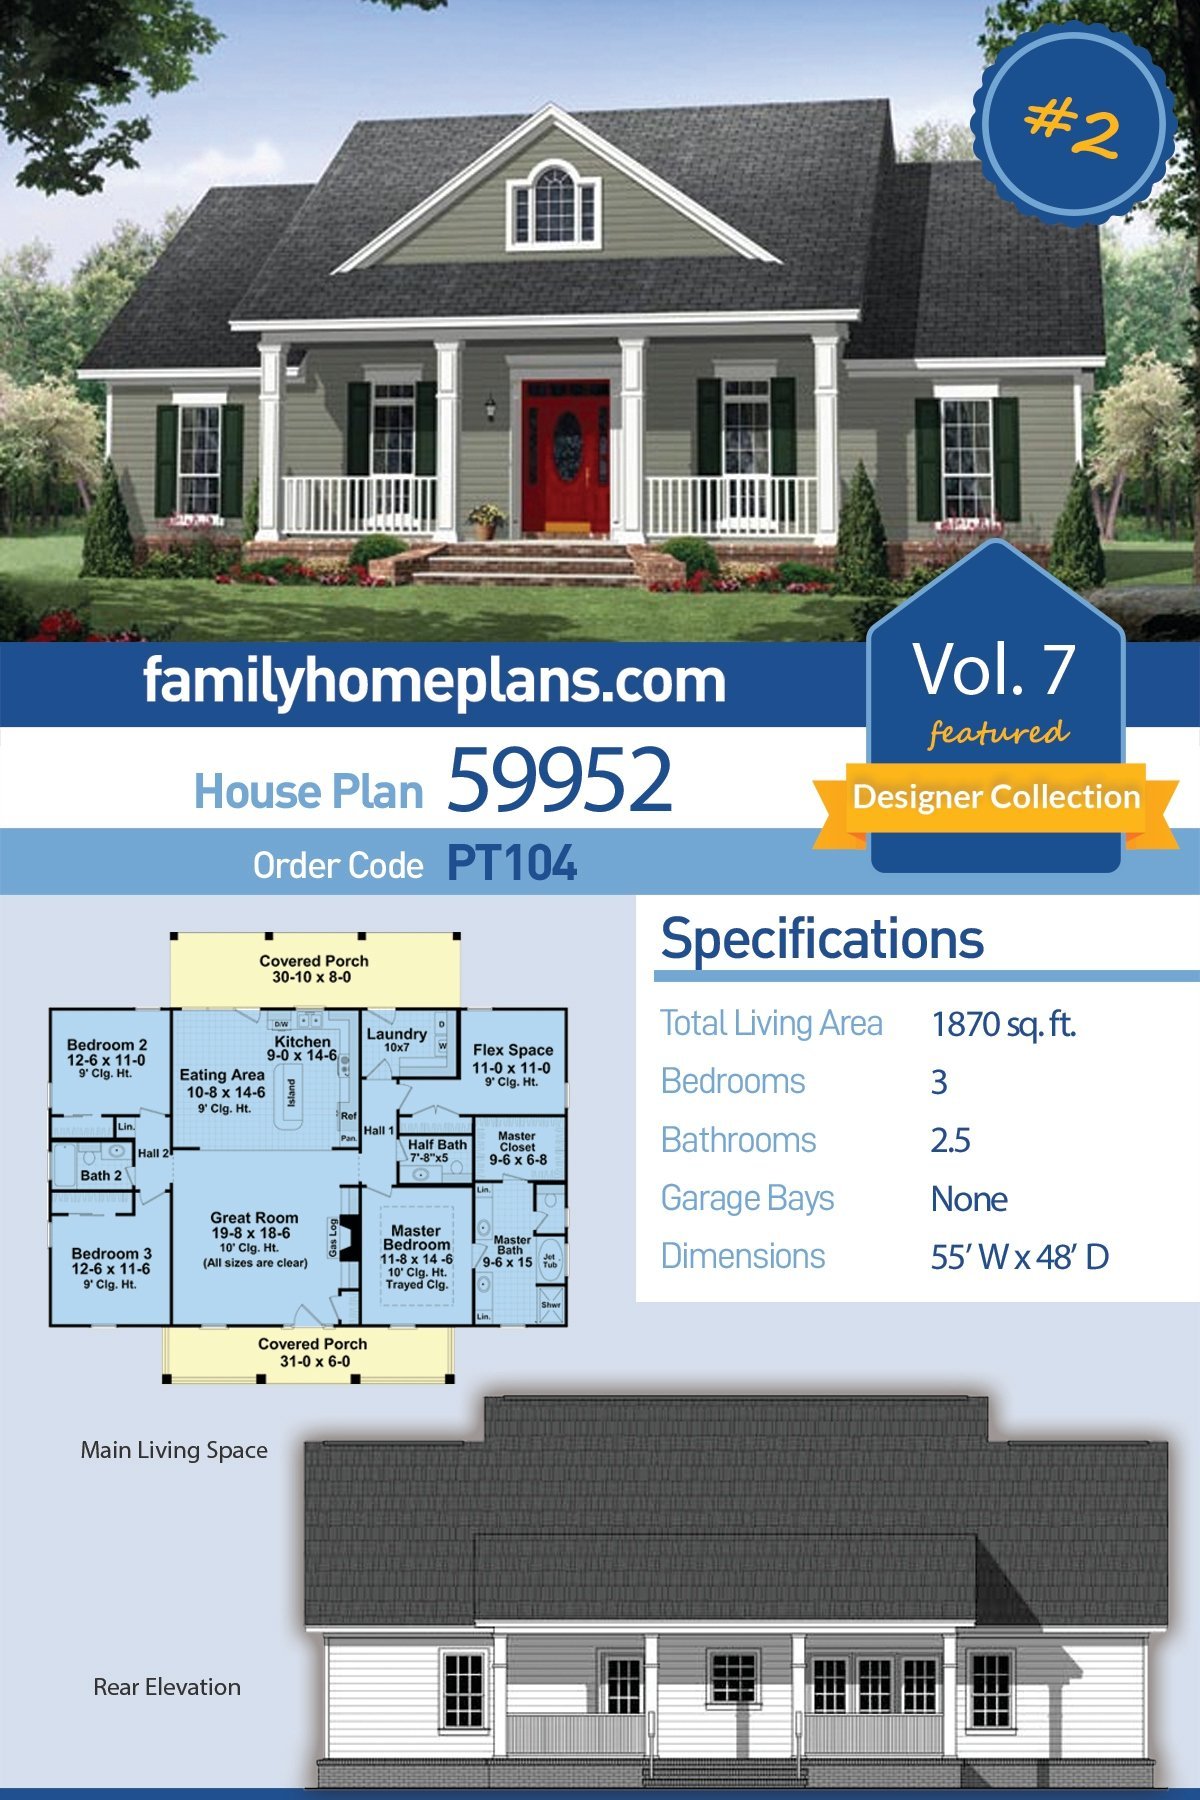 House Plan 59952